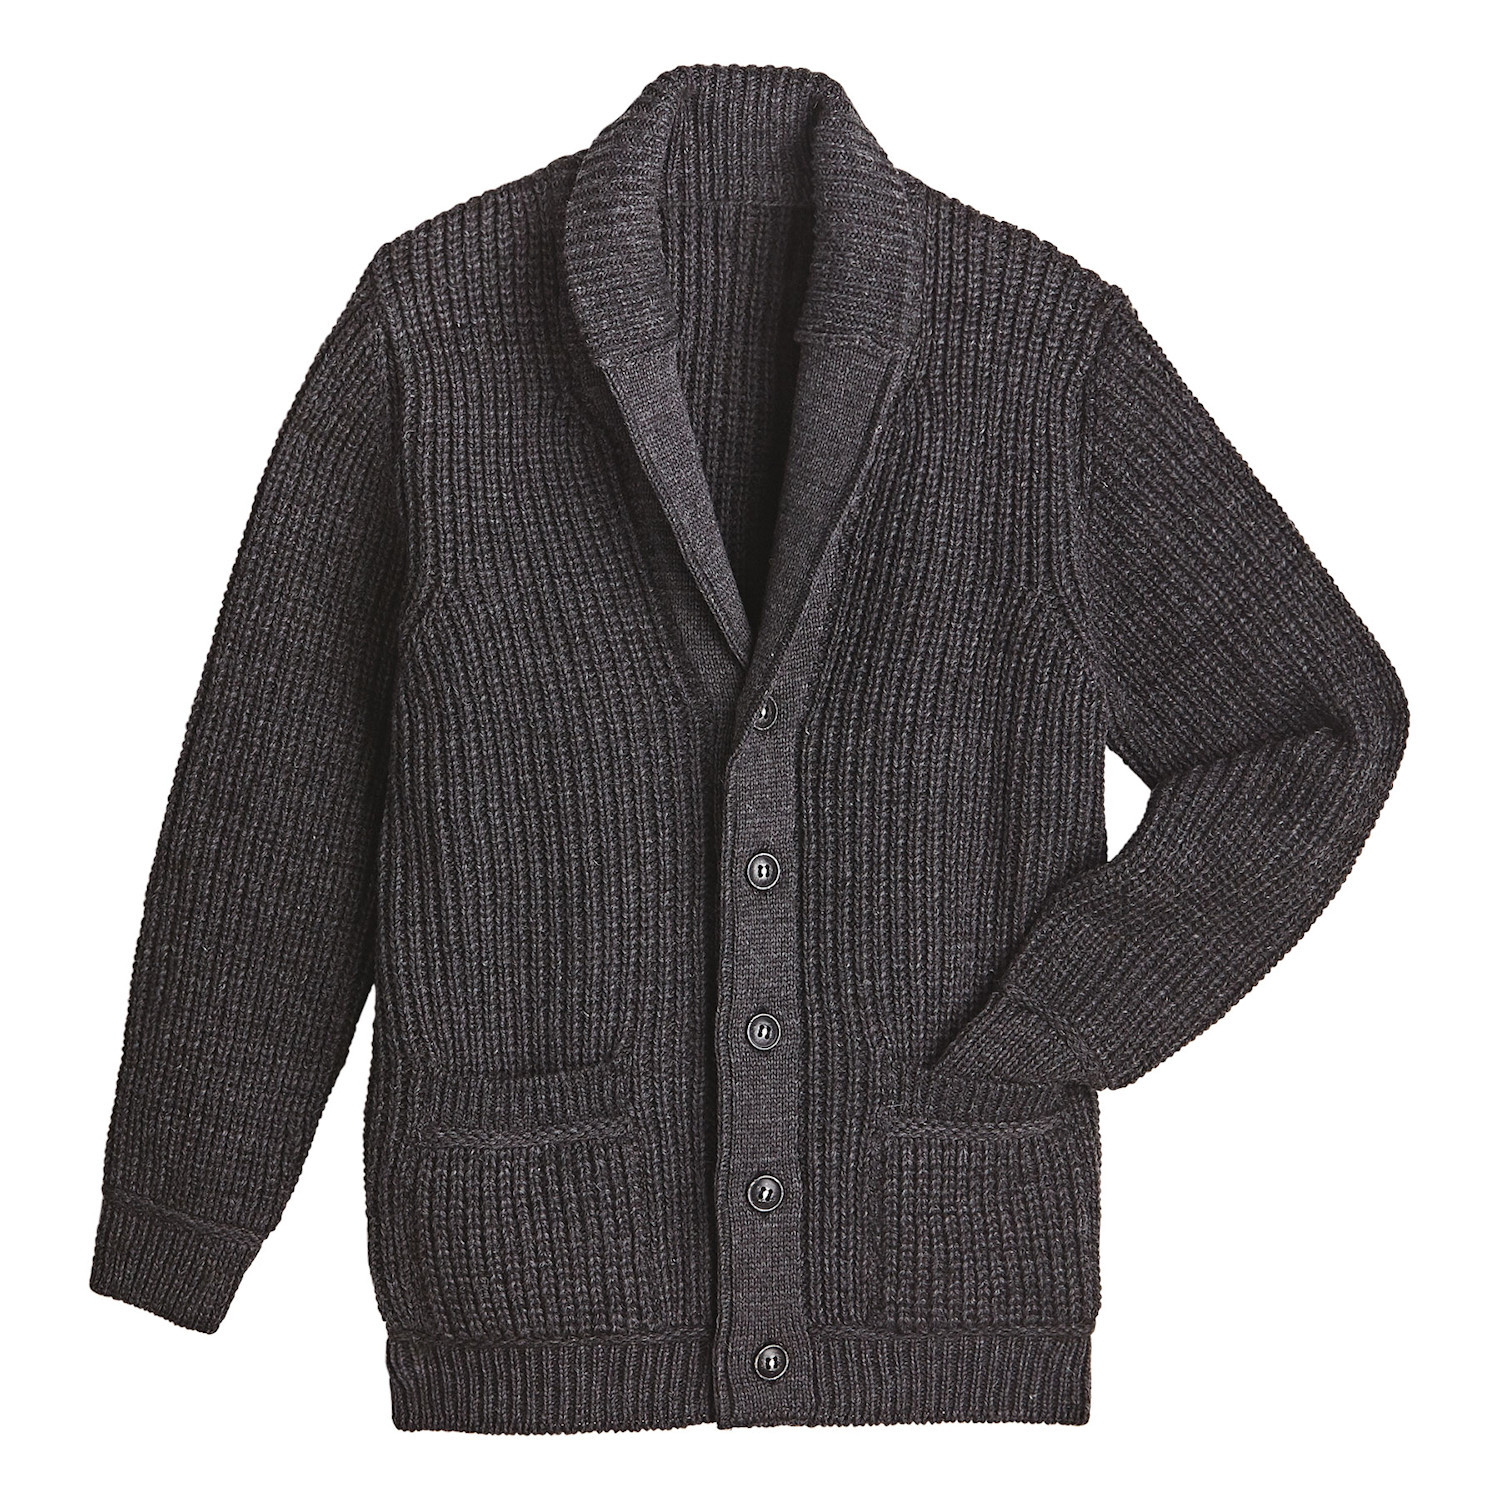 West End Knitwear Men's Merino Wool Sweater - Ribbed Knit Shawl Collar ...